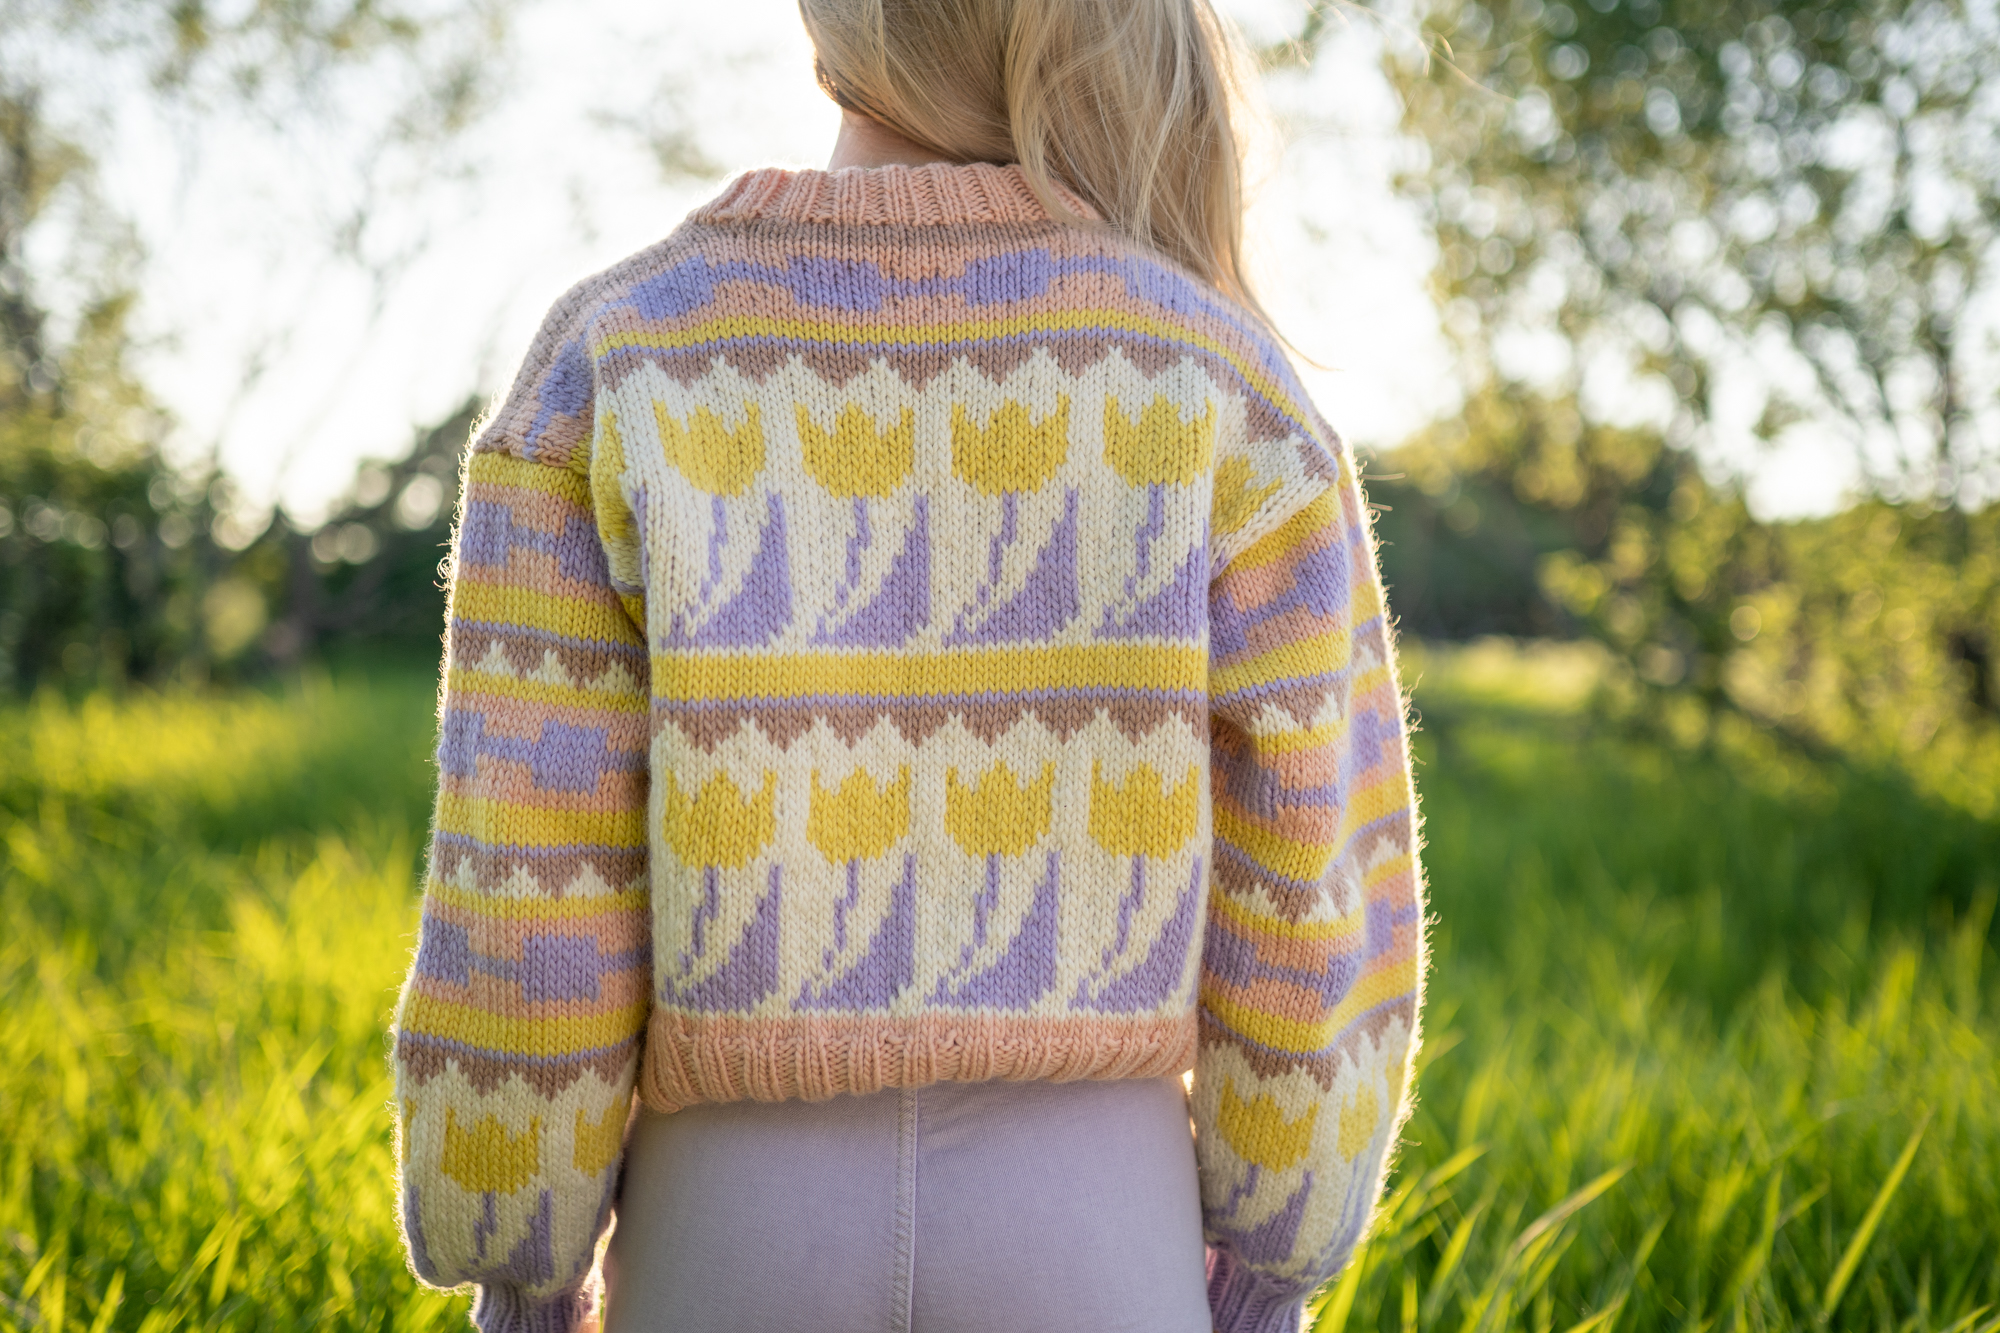  - Tulip sweater | 80s sweater knit | Knitting kit - by HipKnitShop - 09/08/2020